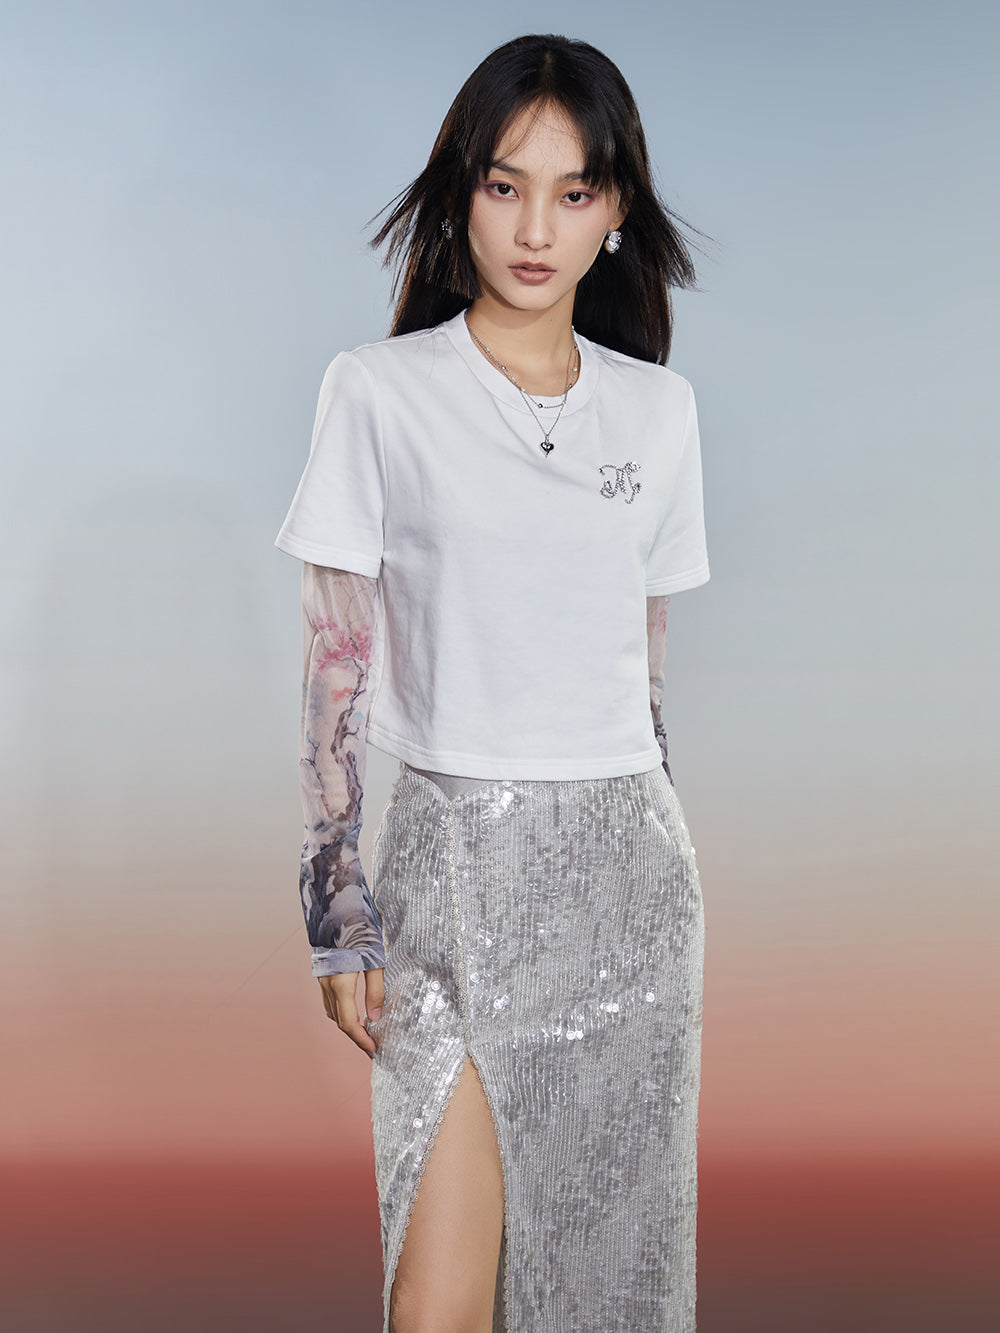 MUKZIN Classic Chinese Jacquard Casual White T-Shirt